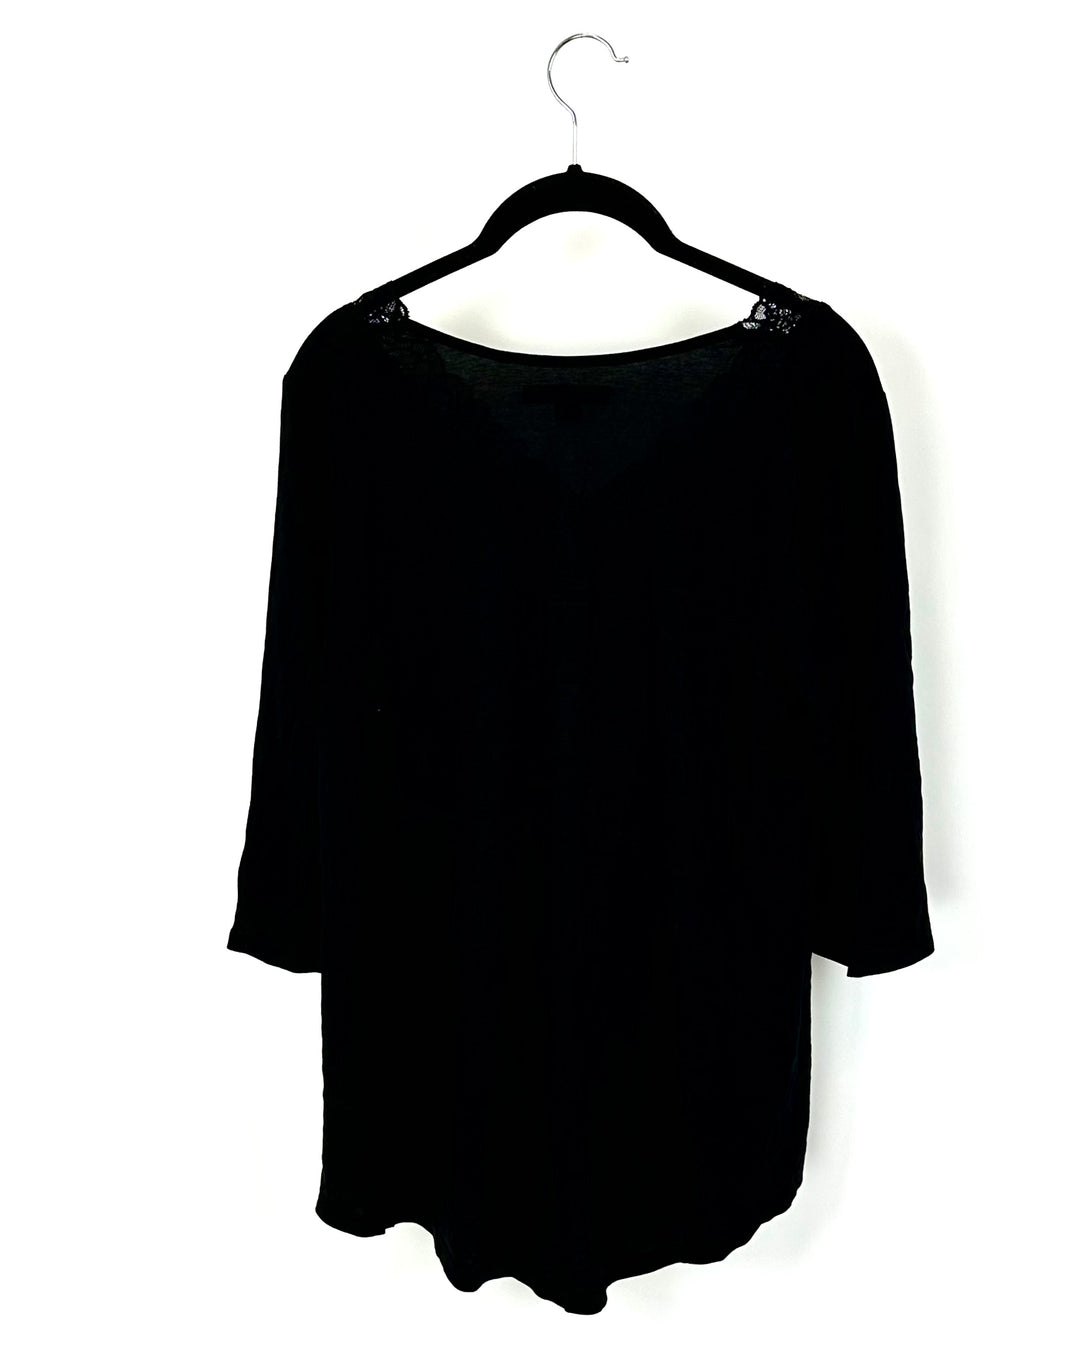 Black Long Sleeve Sleep Shirt - Small